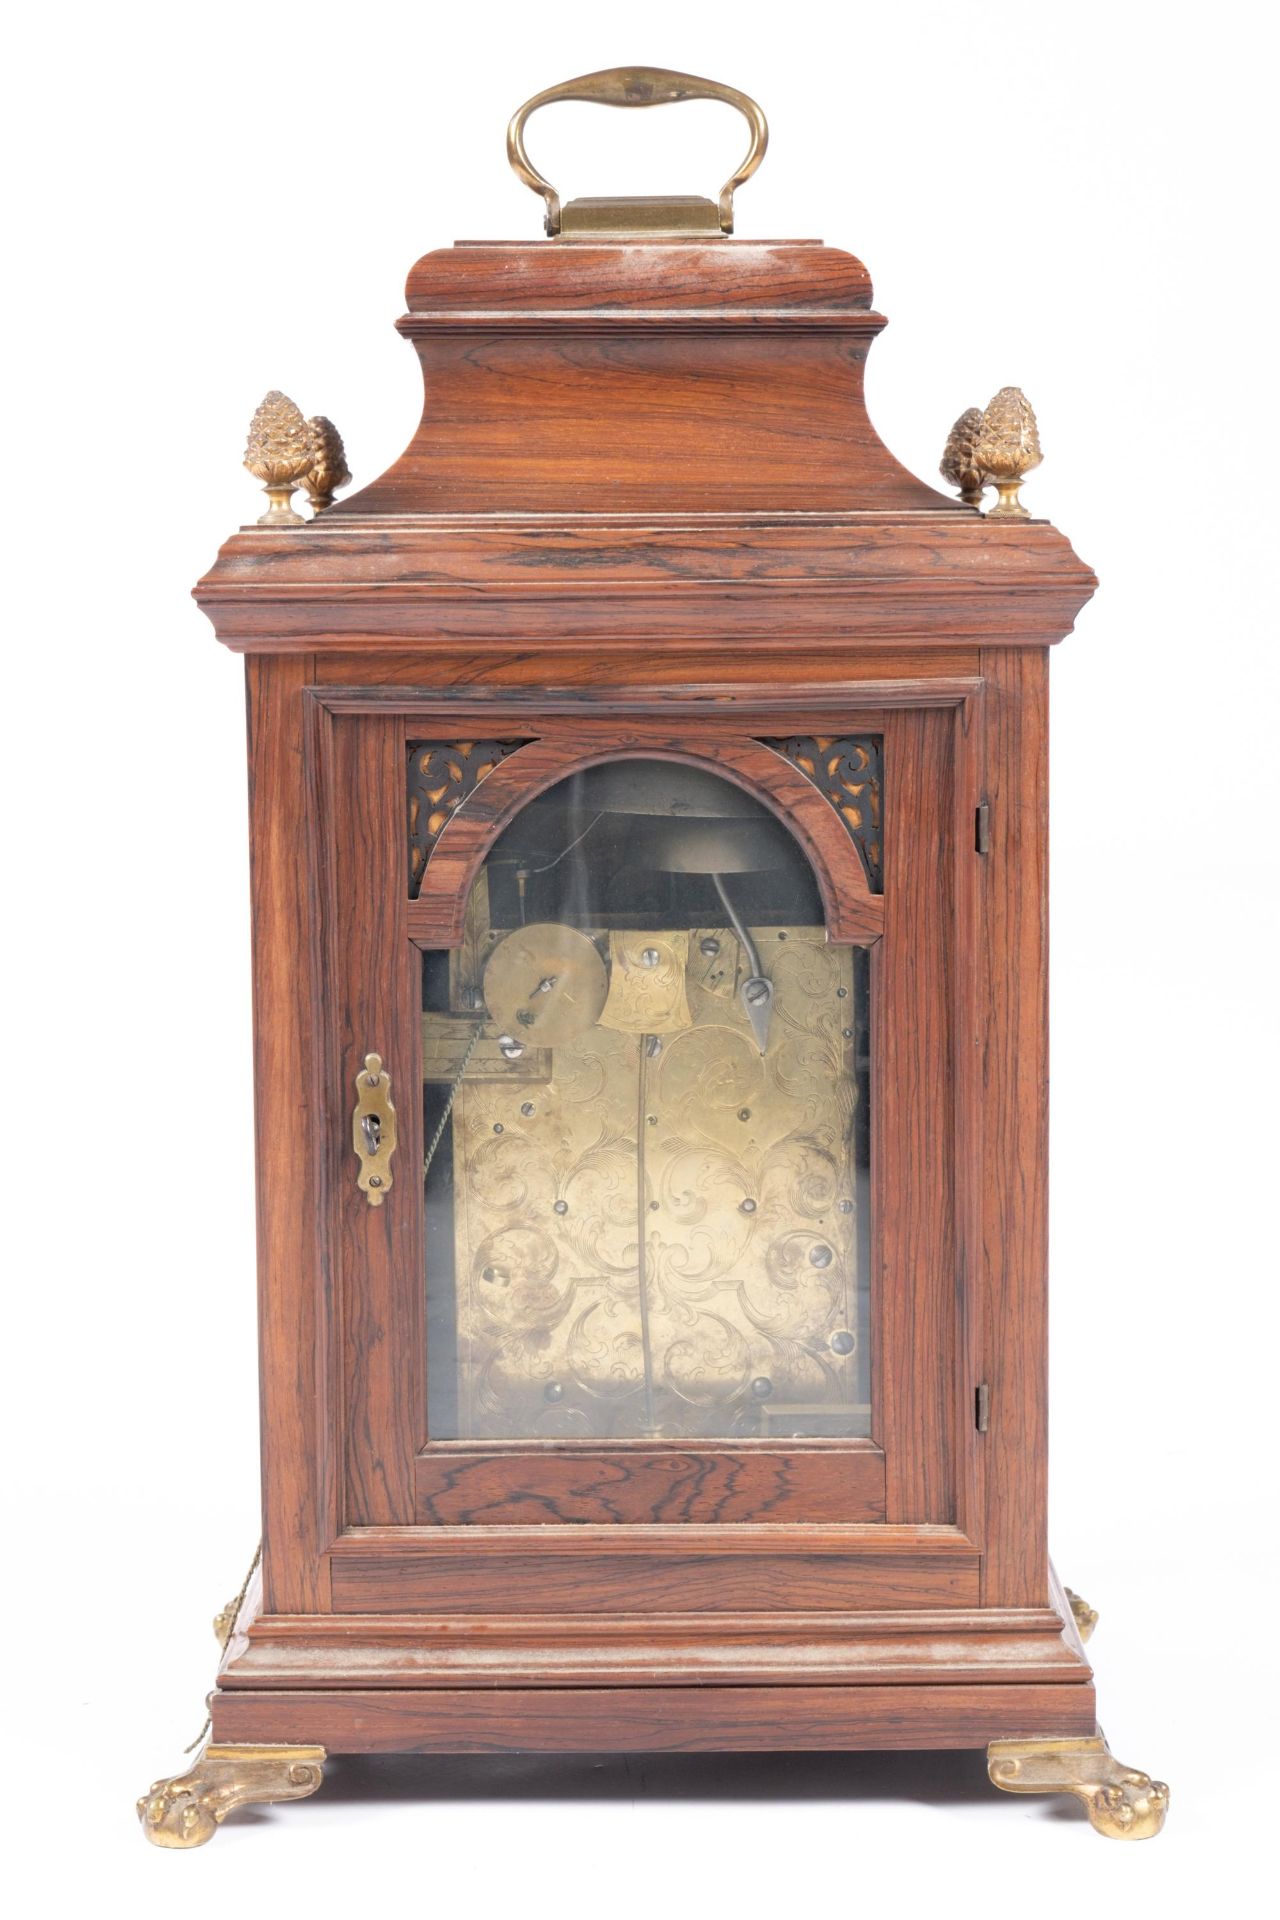 A Dutch rosewood bracket clock - Image 3 of 5